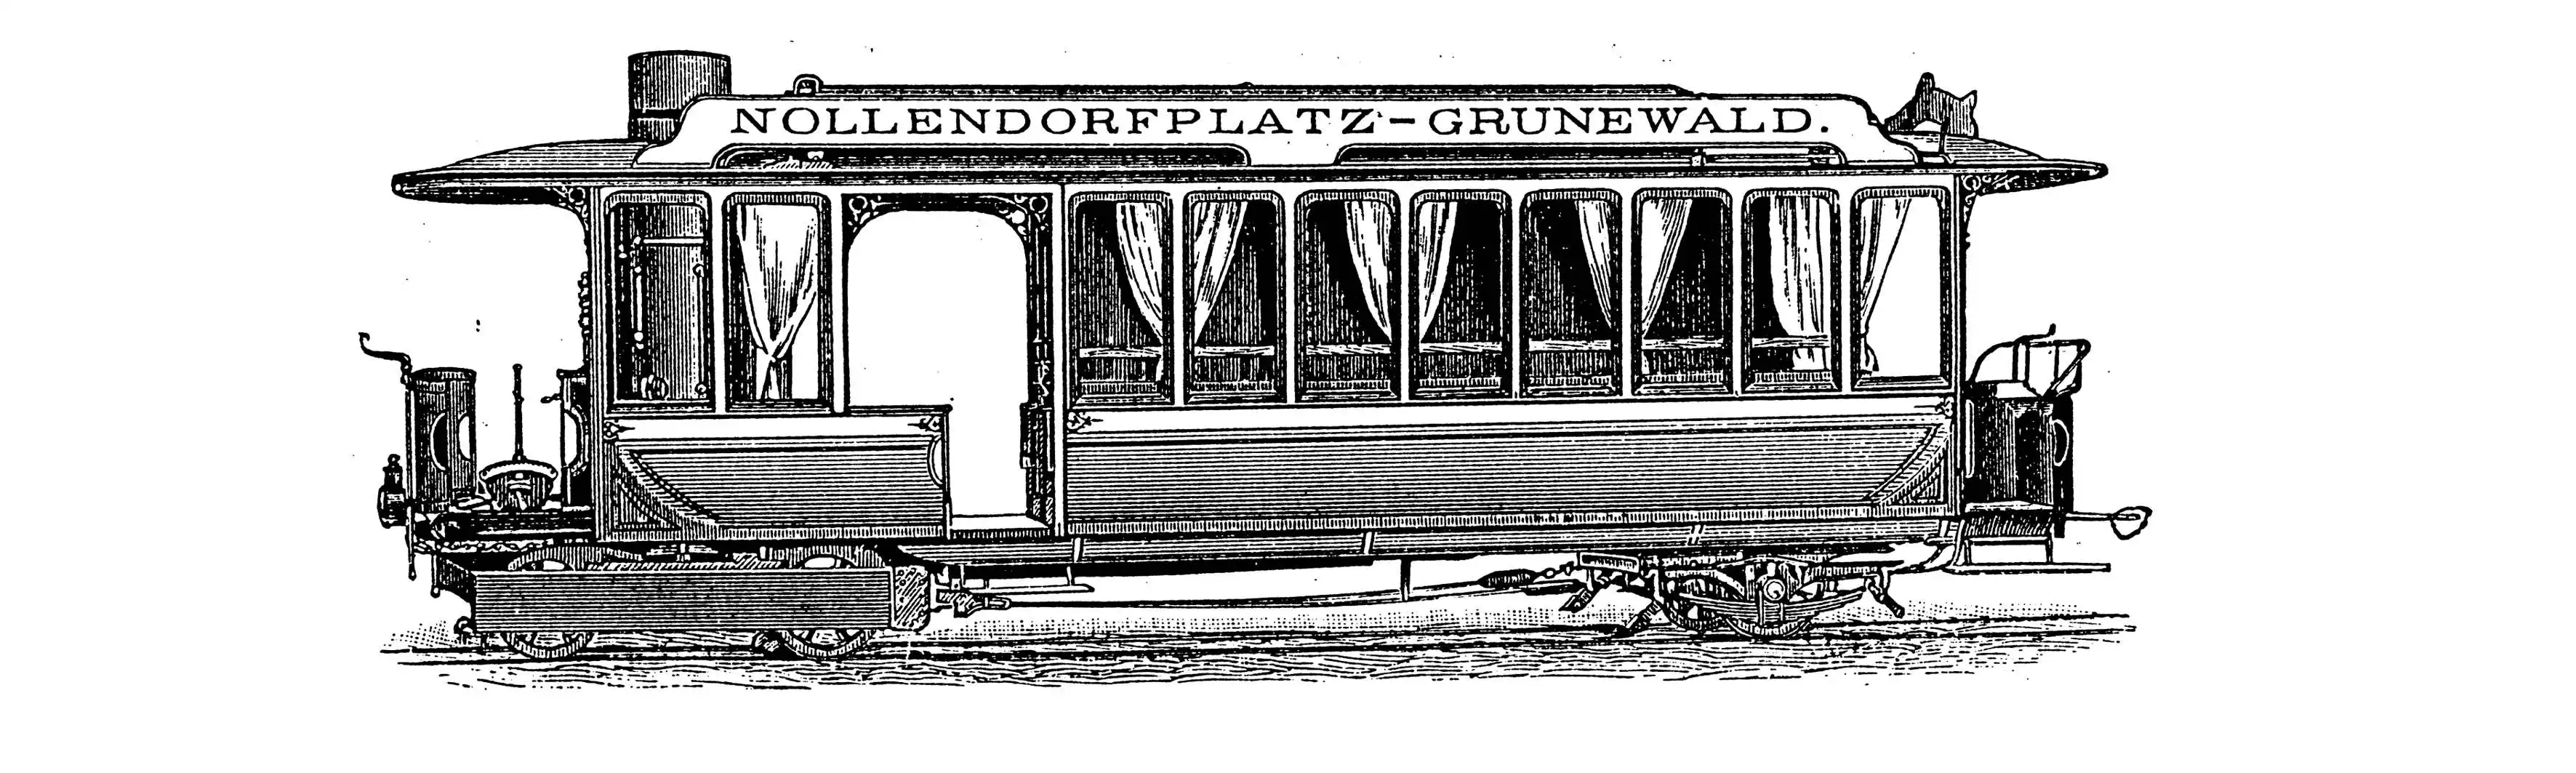 965-389-dampfstrassenbahn-1894.webp